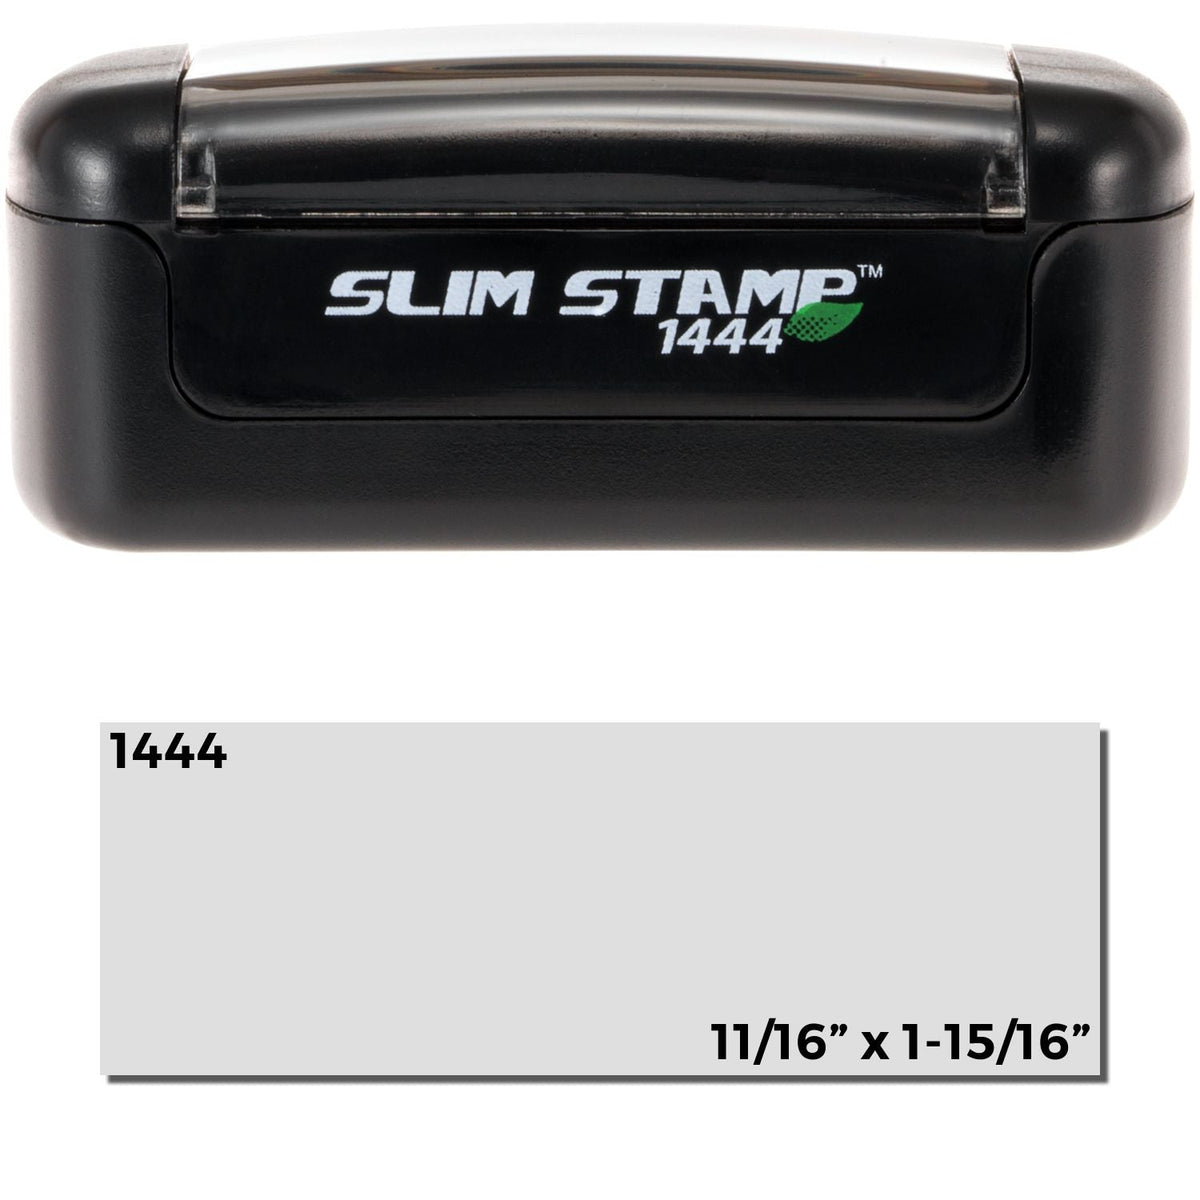 Slim Stamp 1444 Pre Inked Stamp 1 2 X 1 3 4 Main Image